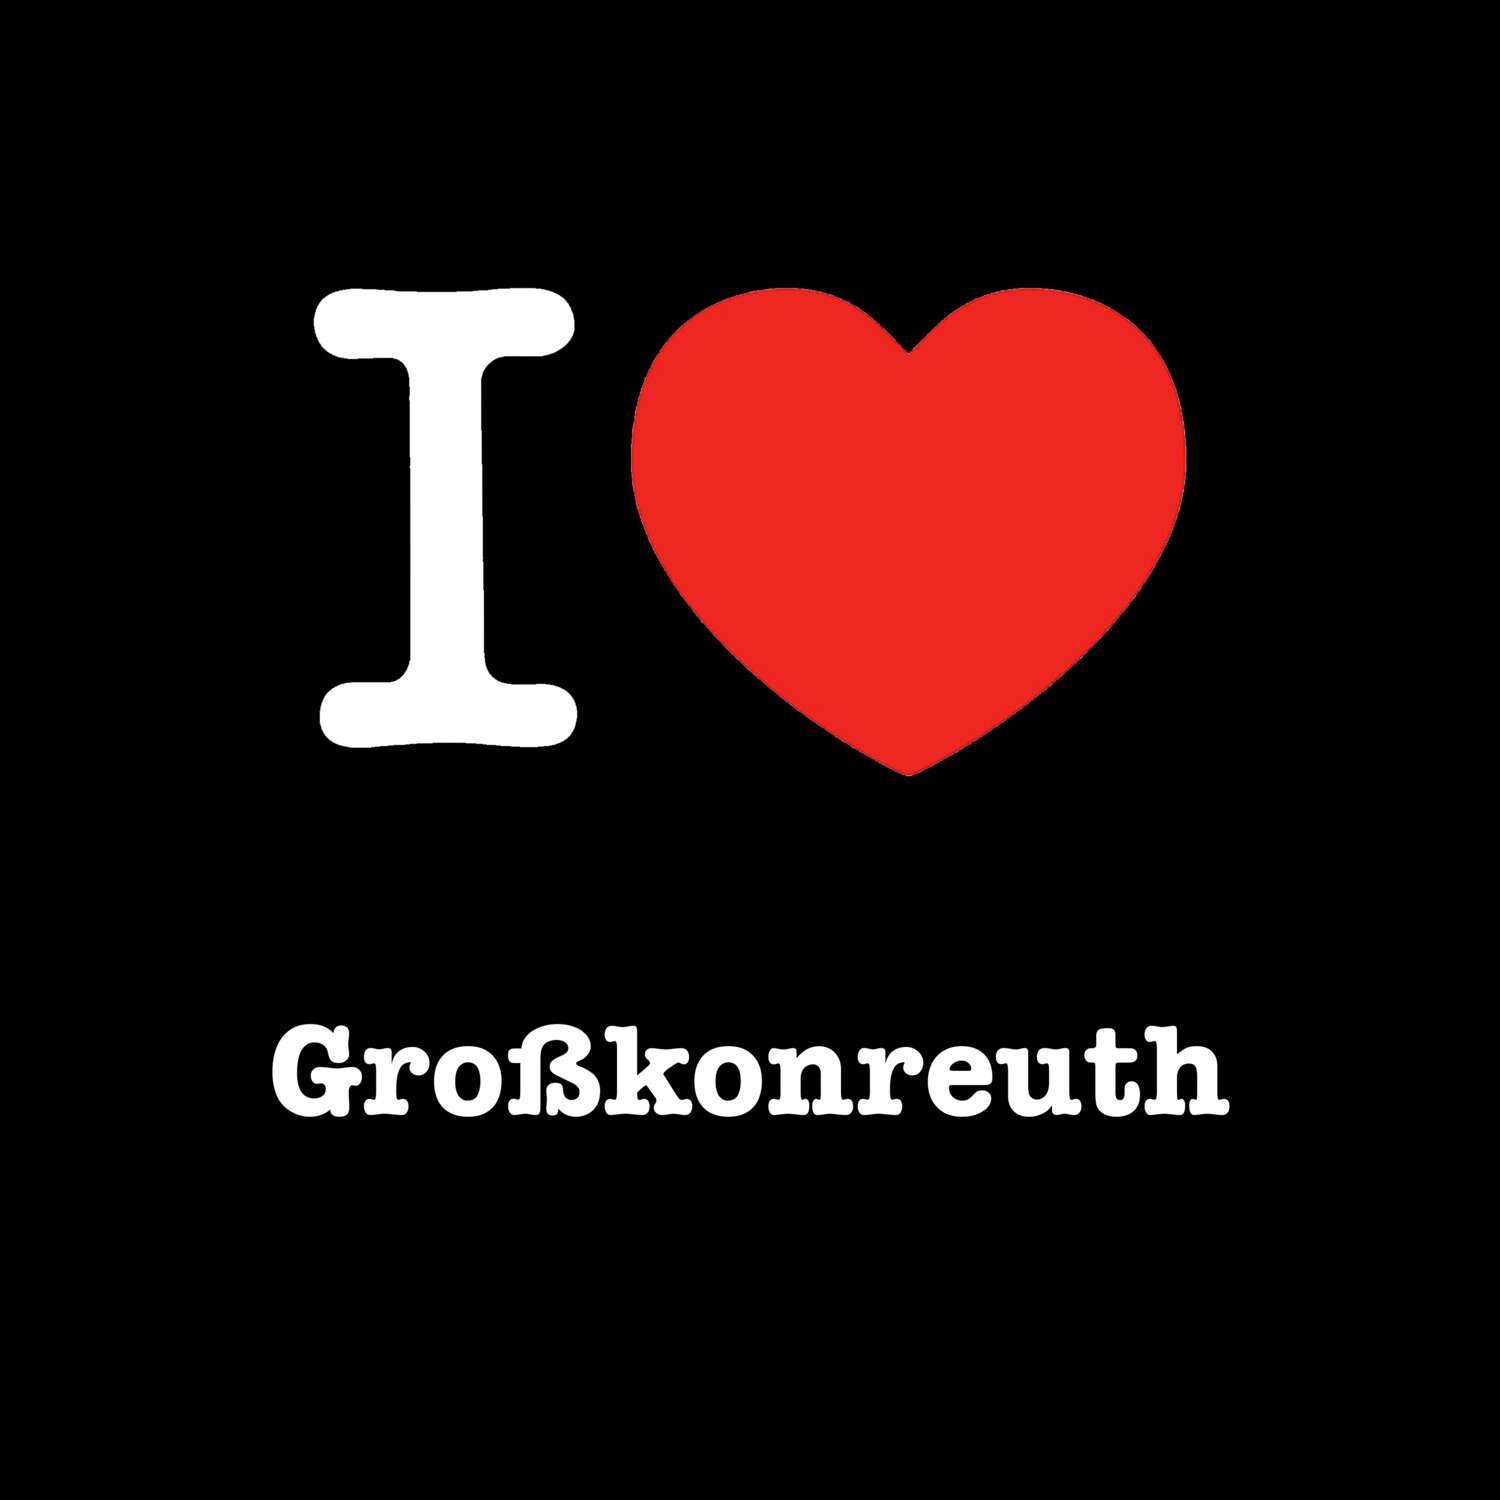 Großkonreuth T-Shirt »I love«